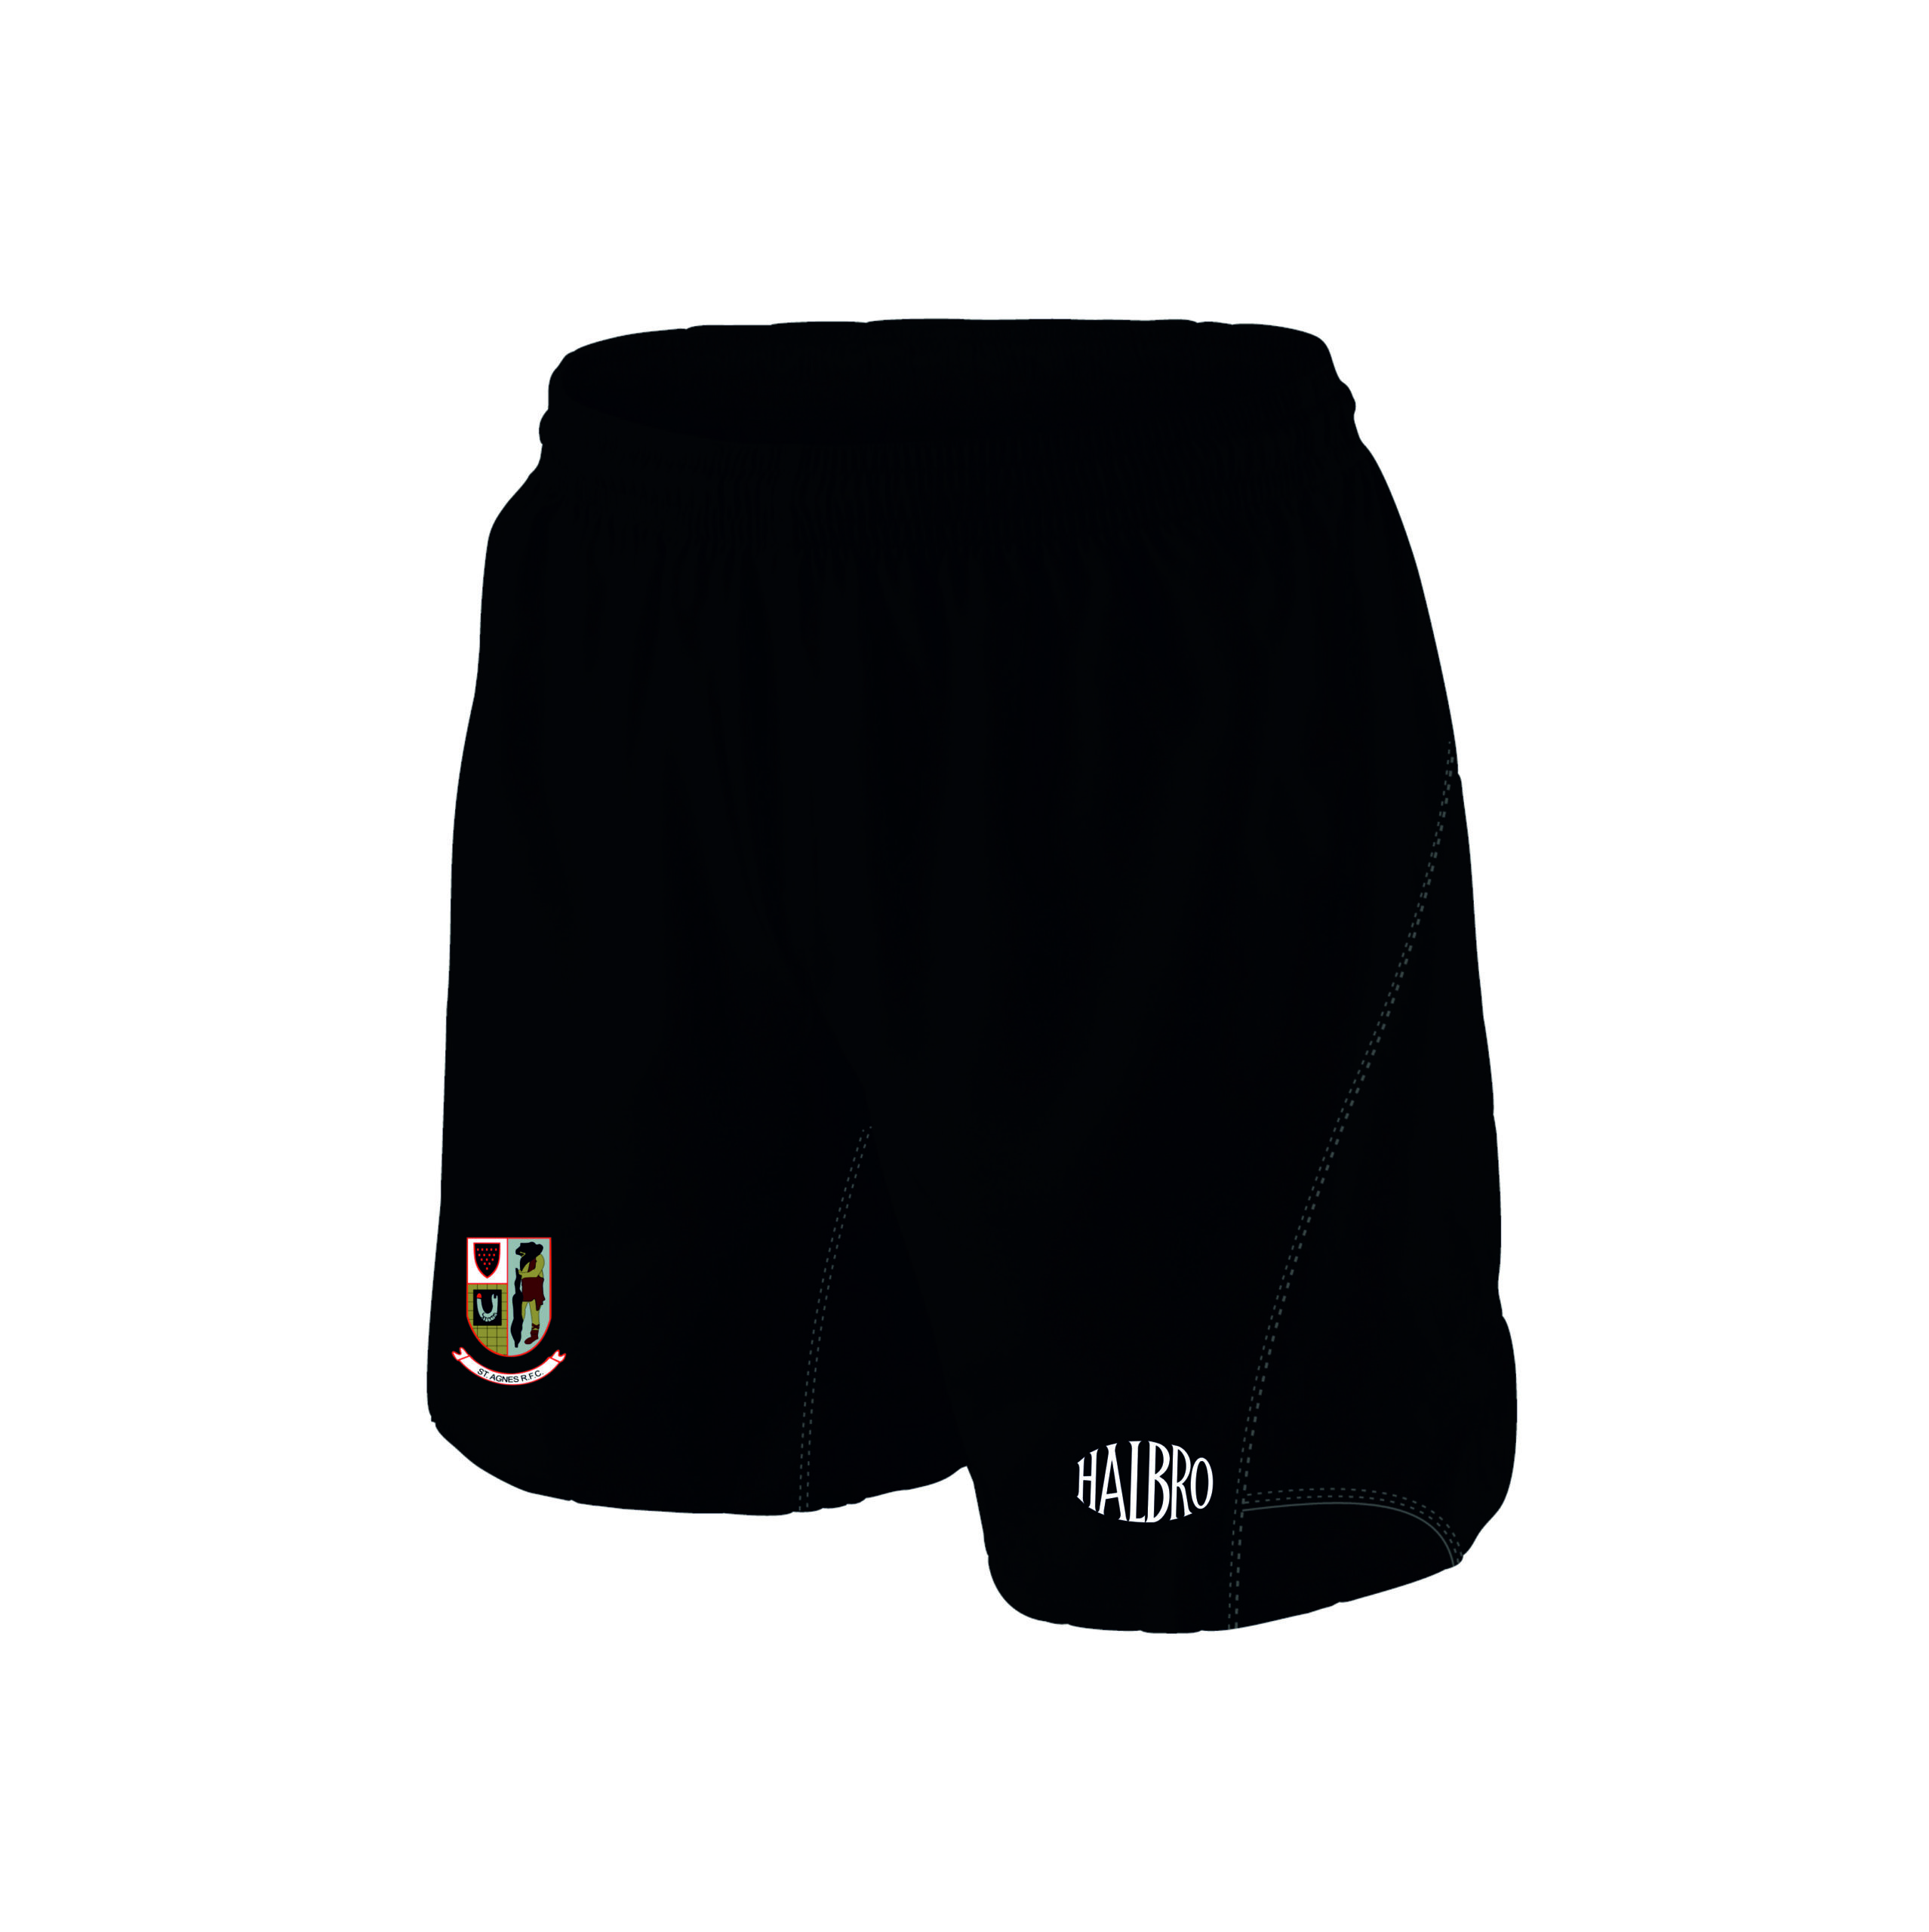 St Agnes RFC Seniors Pro Shorts - Halbro Sportswear Limited